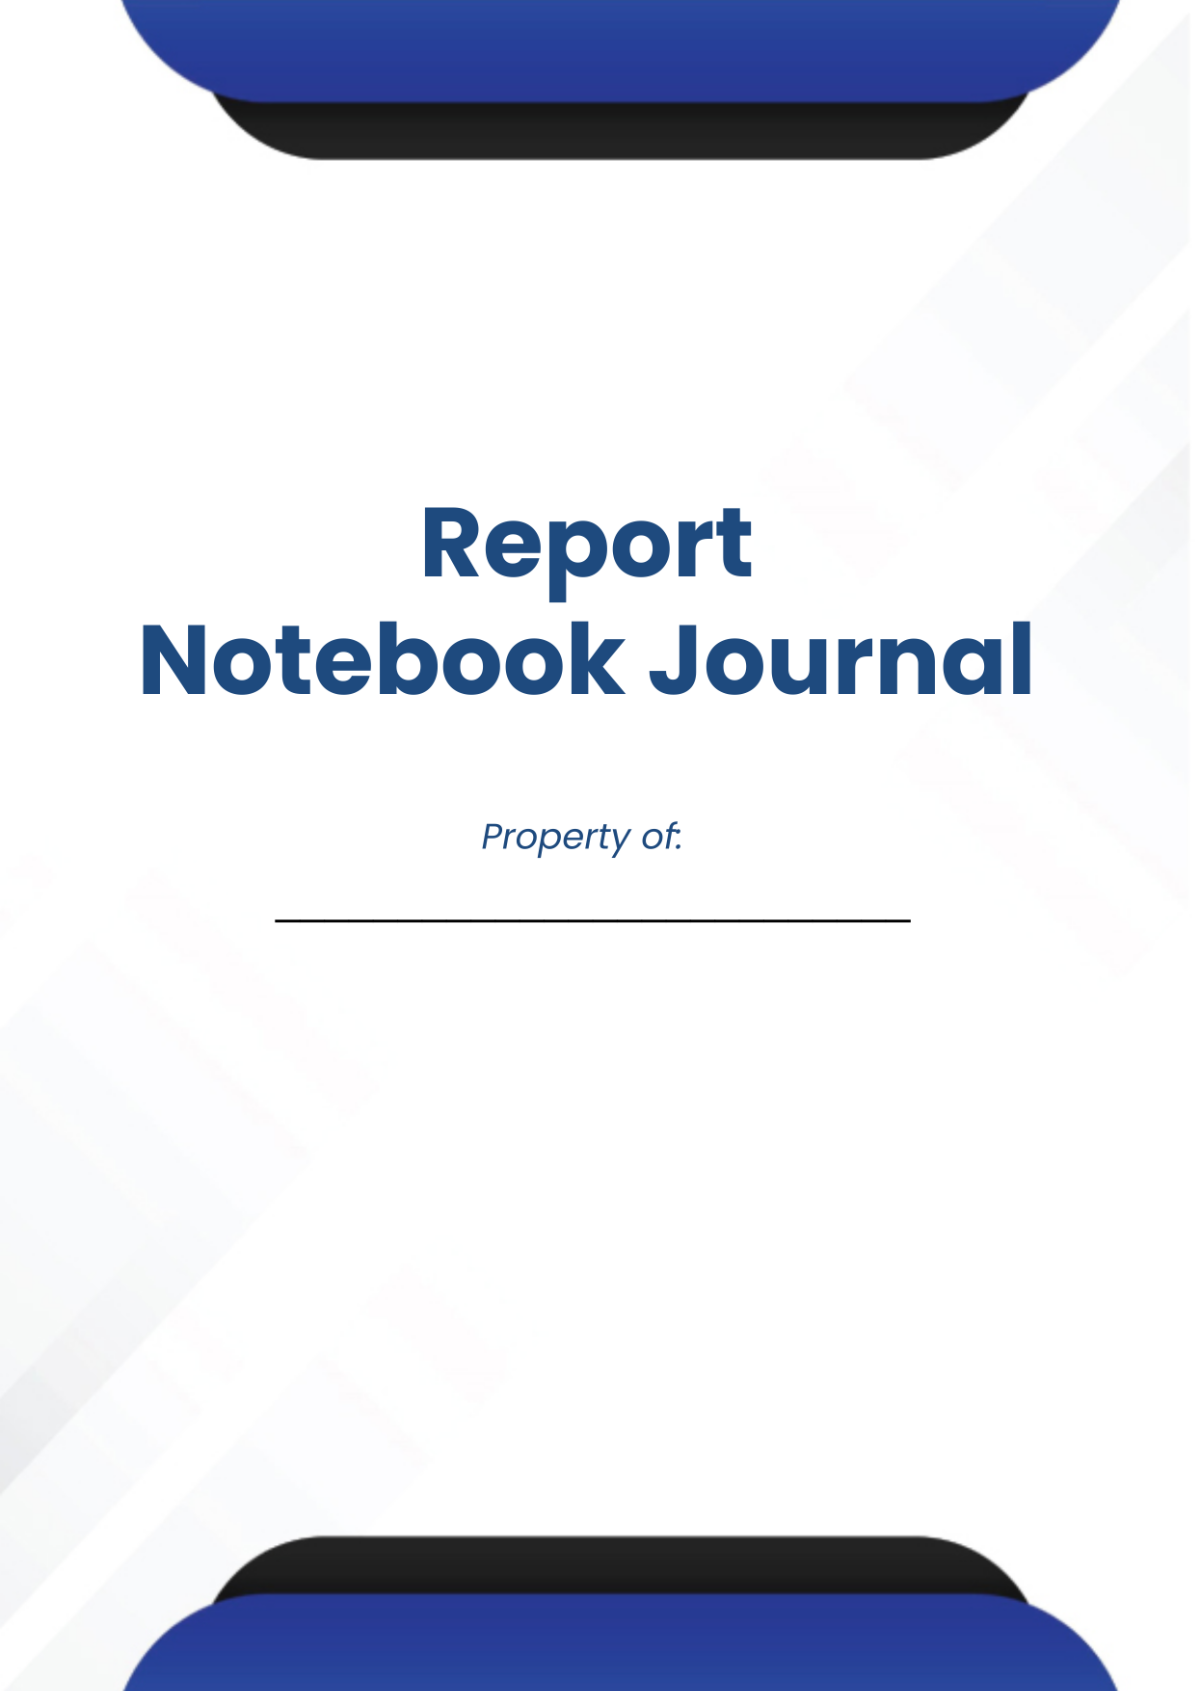 Free Report Notebook Journals